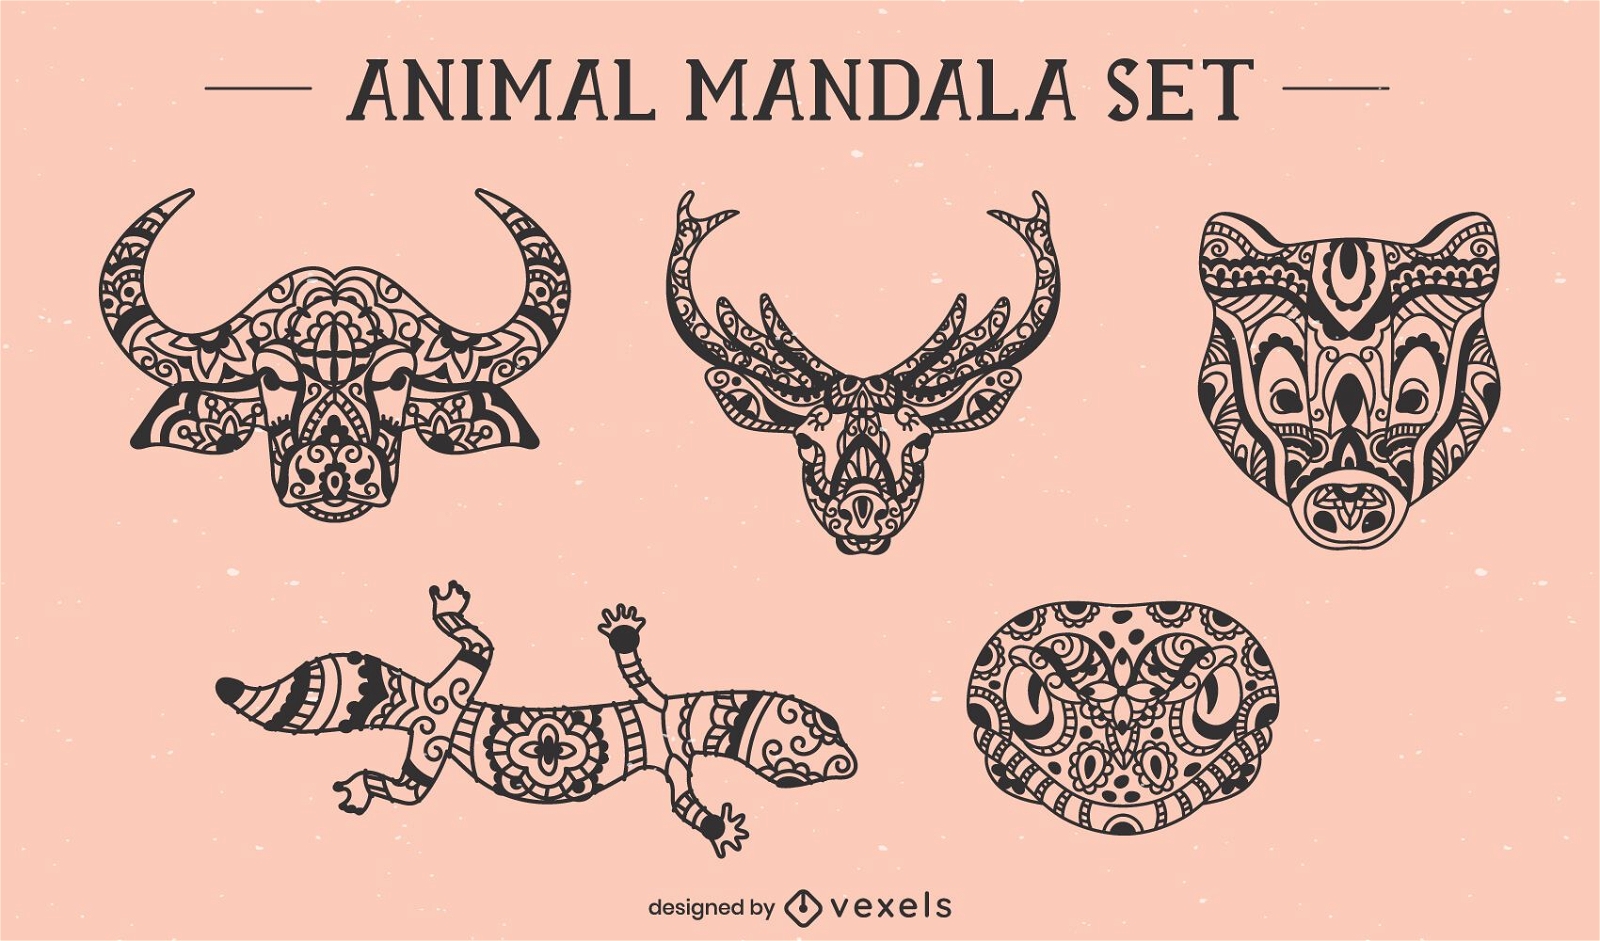 Animal faces frontal mandala set